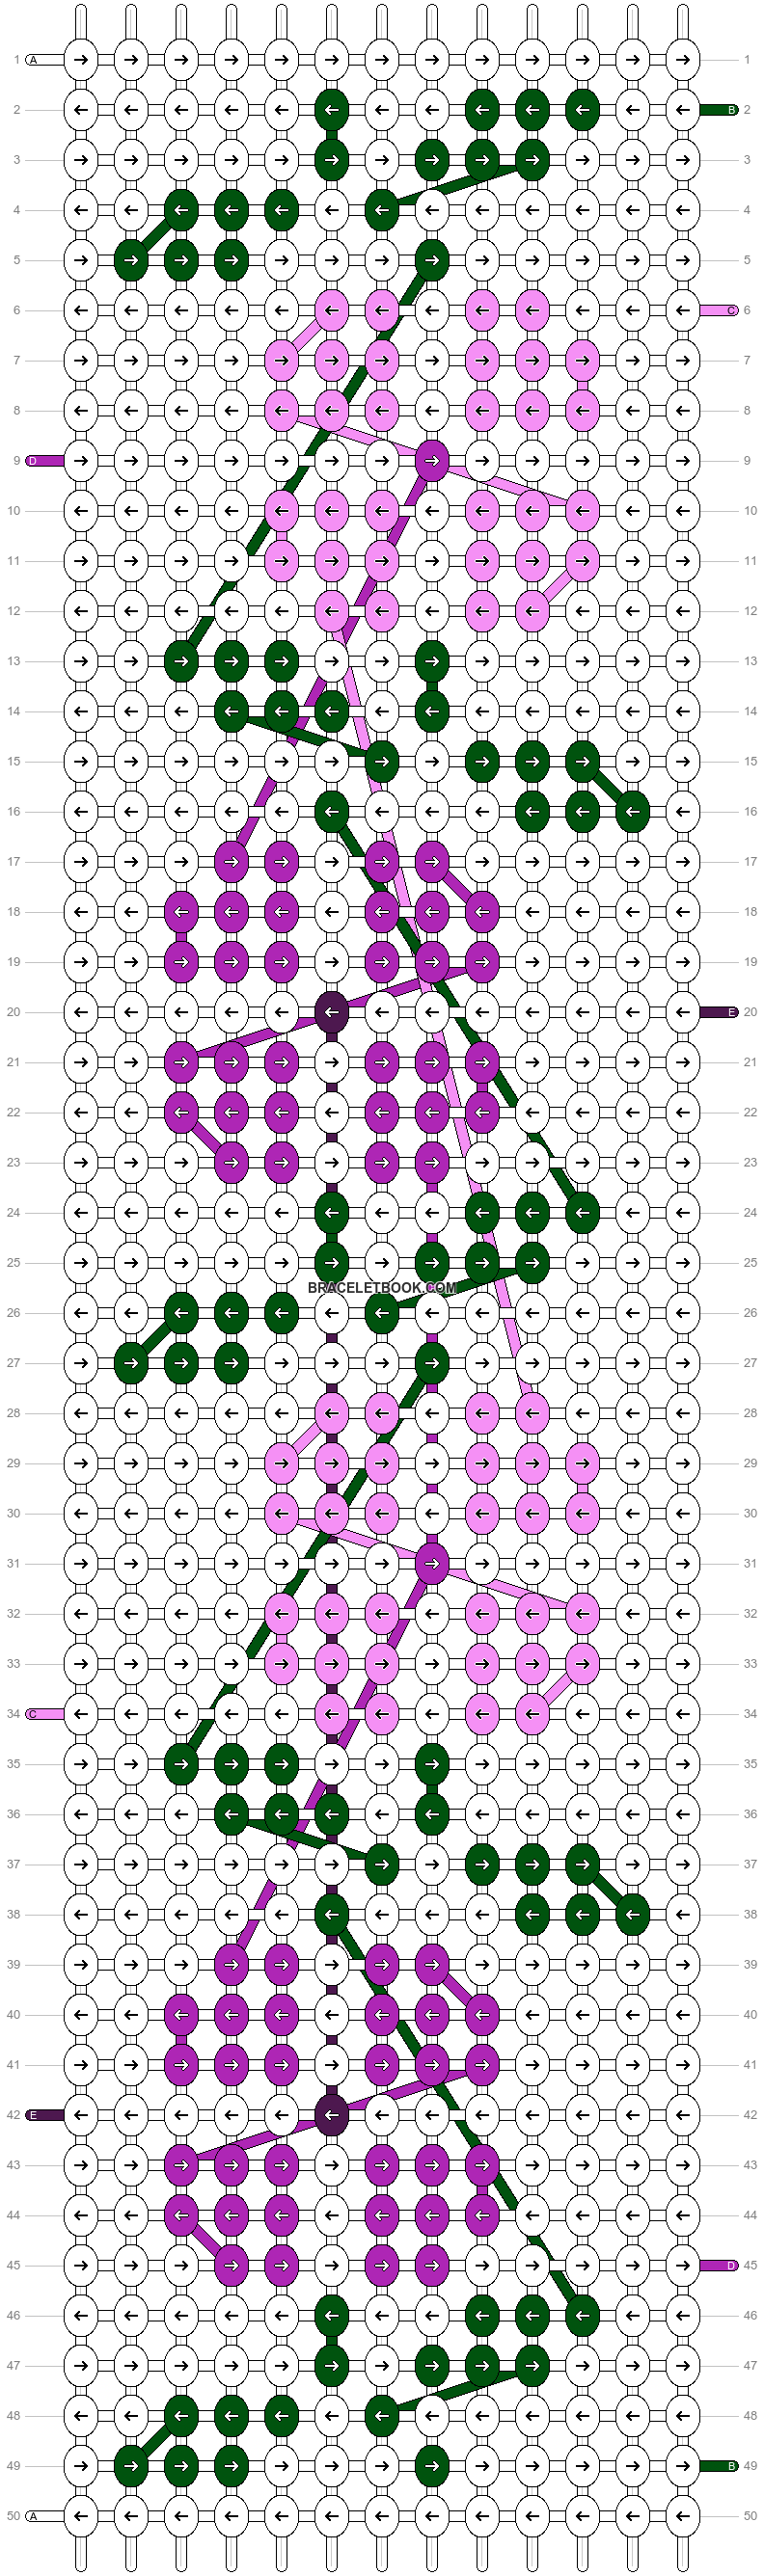 Alpha pattern #56552 pattern